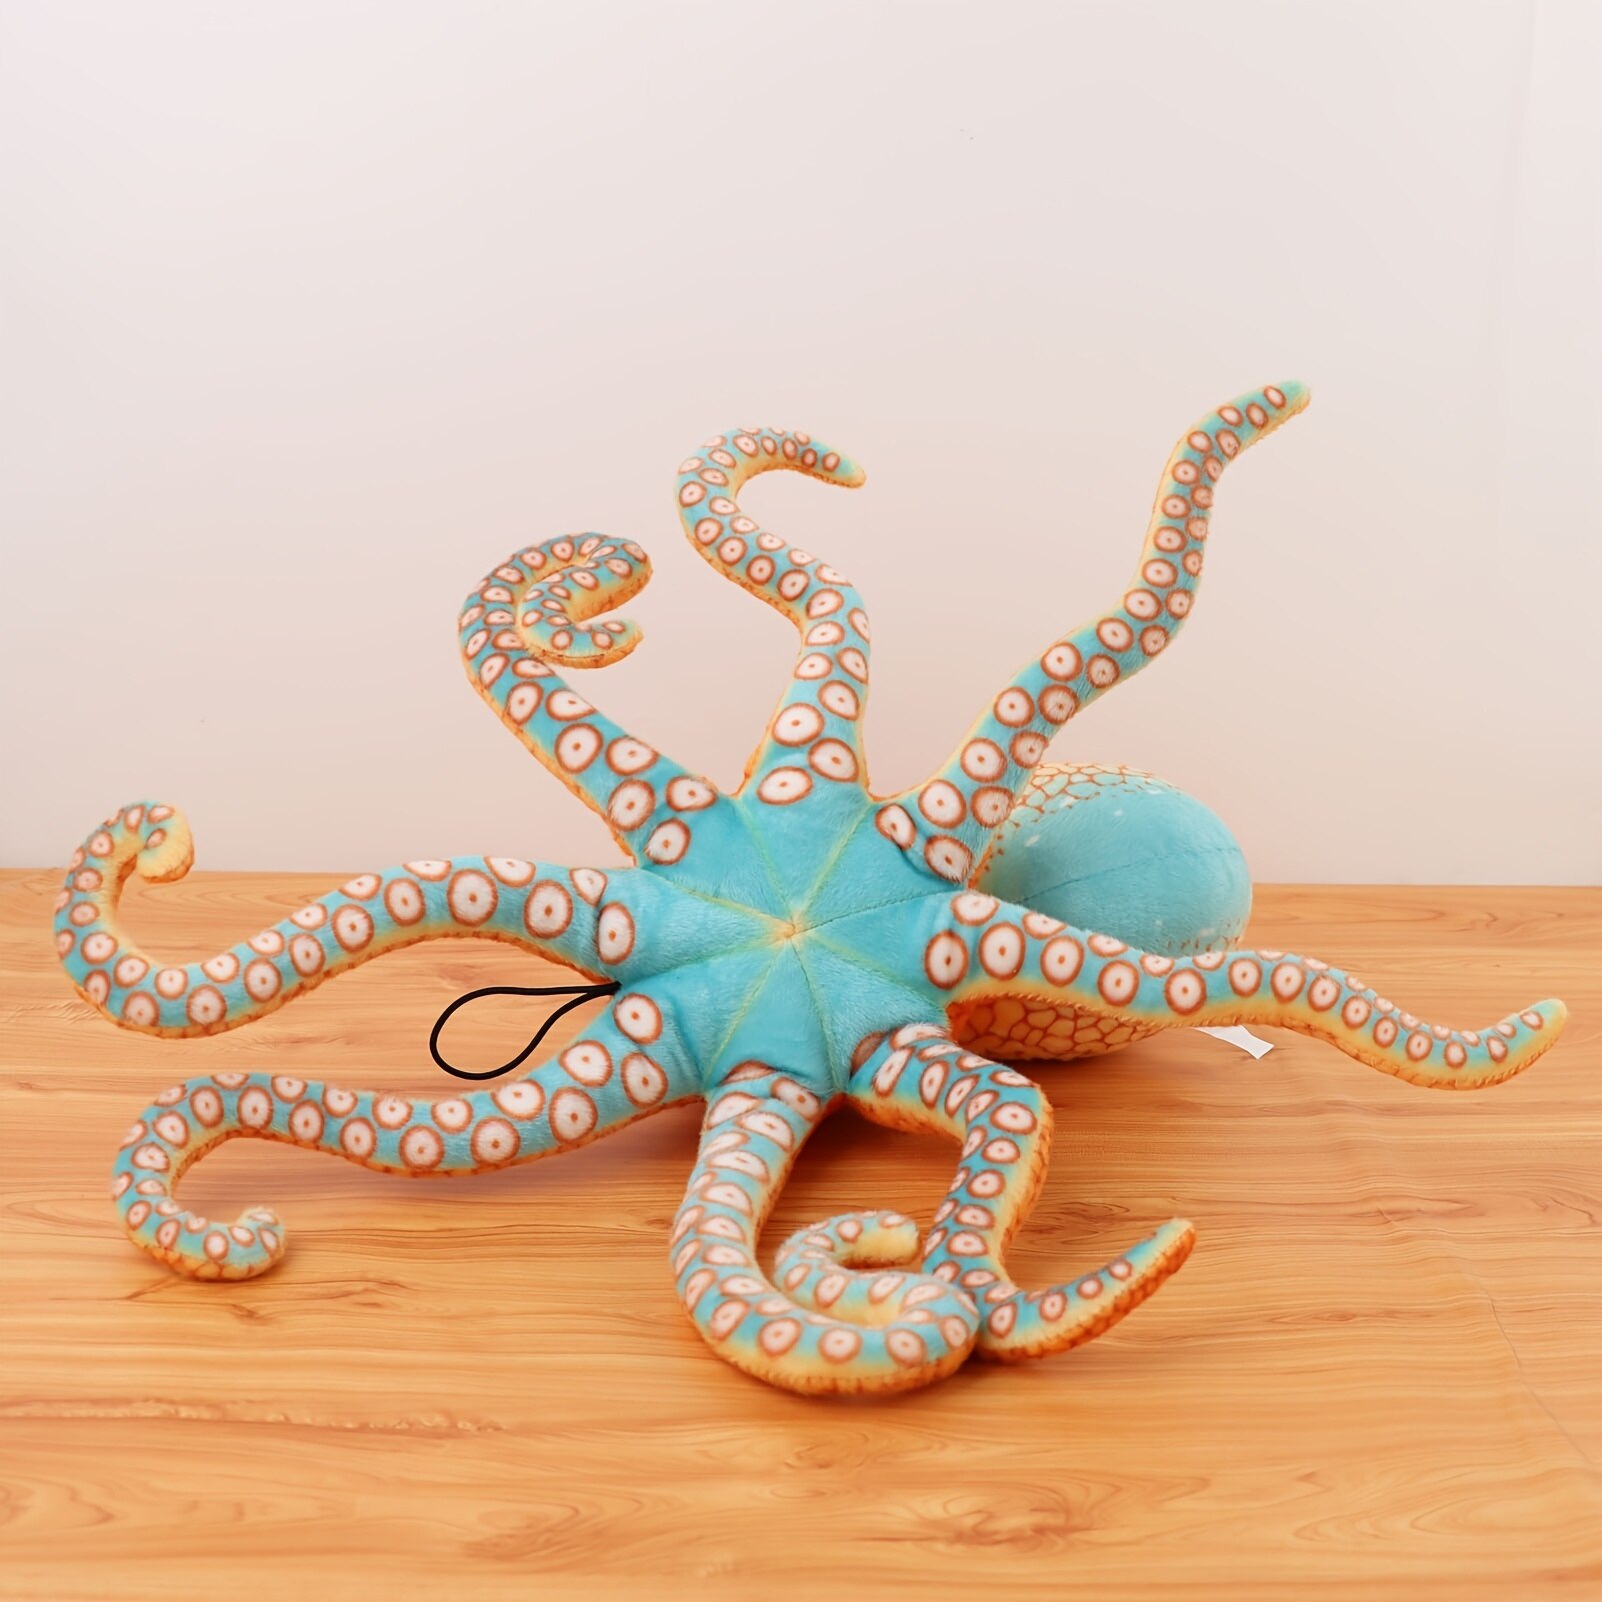 55 80cm Giant Simulated octopus Stuffed Toy High Quality lifelike Stuffed Sea Animal Doll Plush toys 2